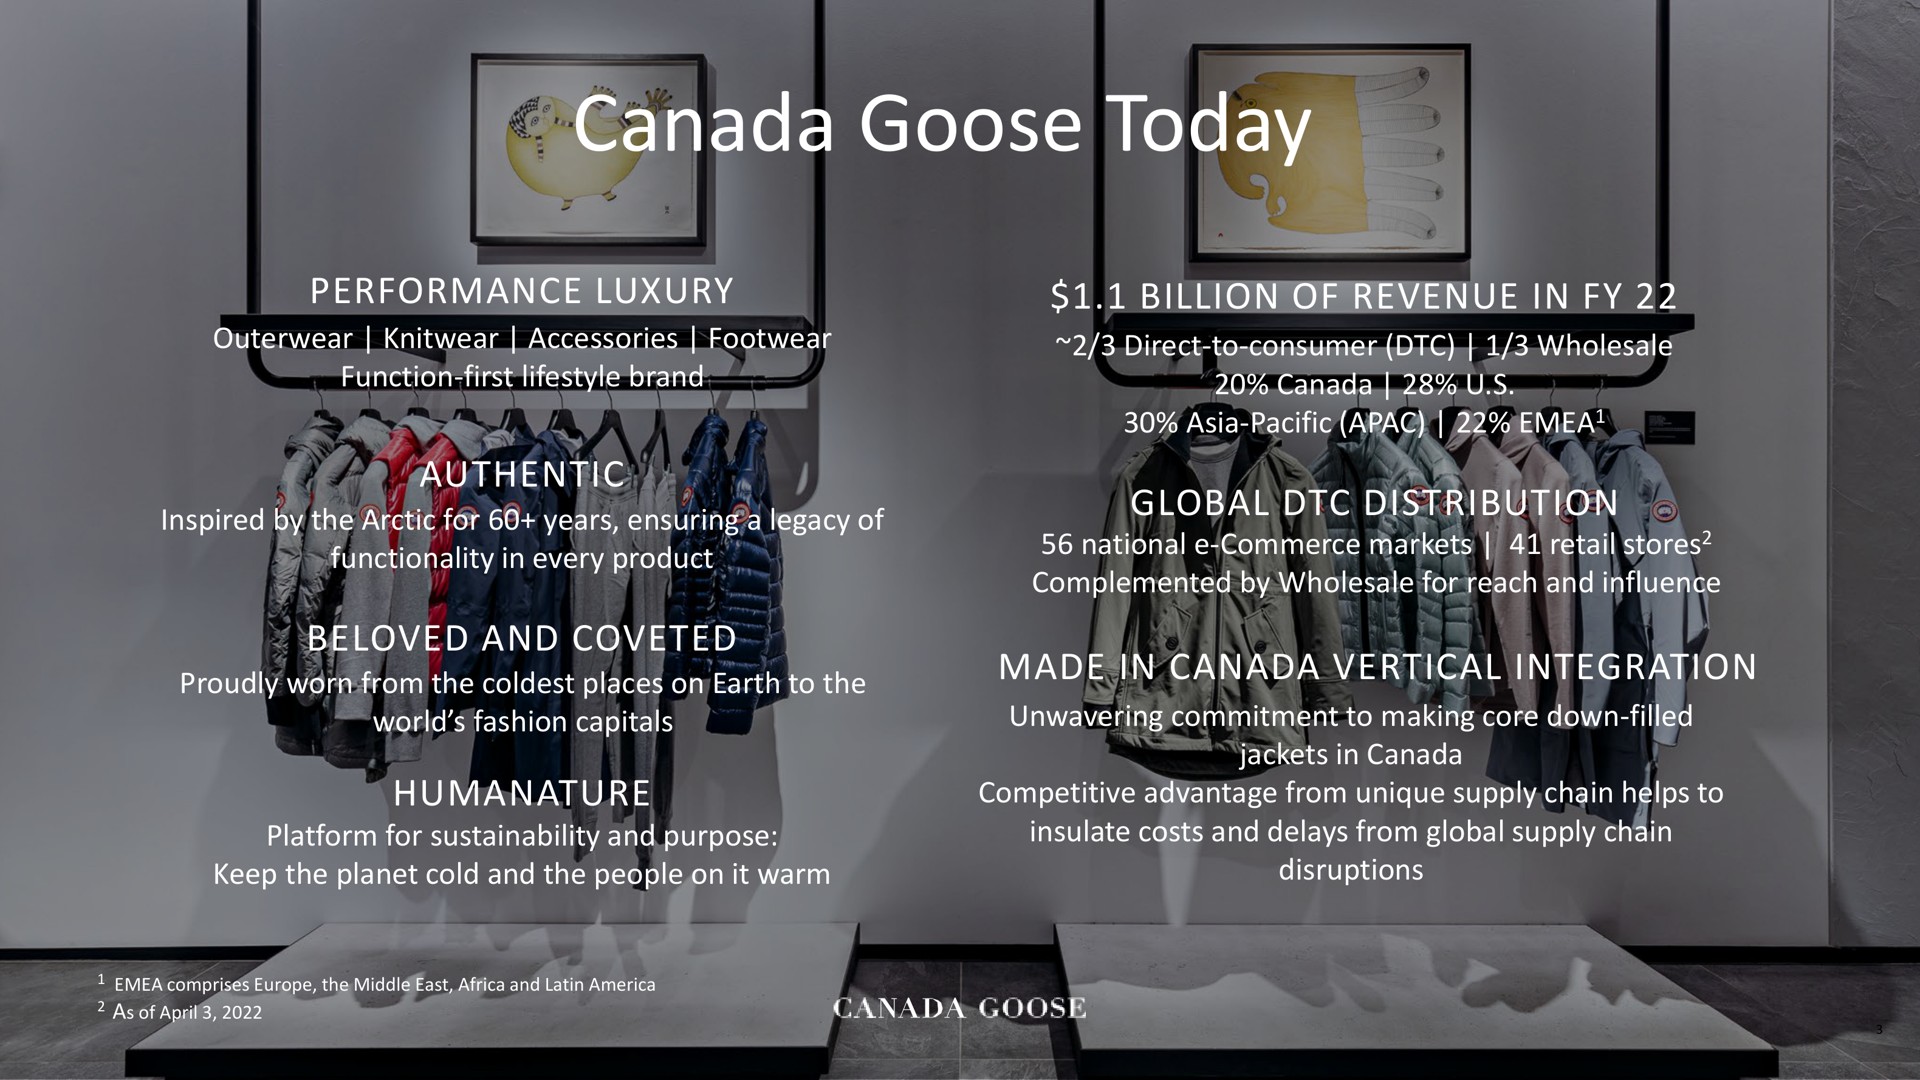 canada goose today | Canada Goose